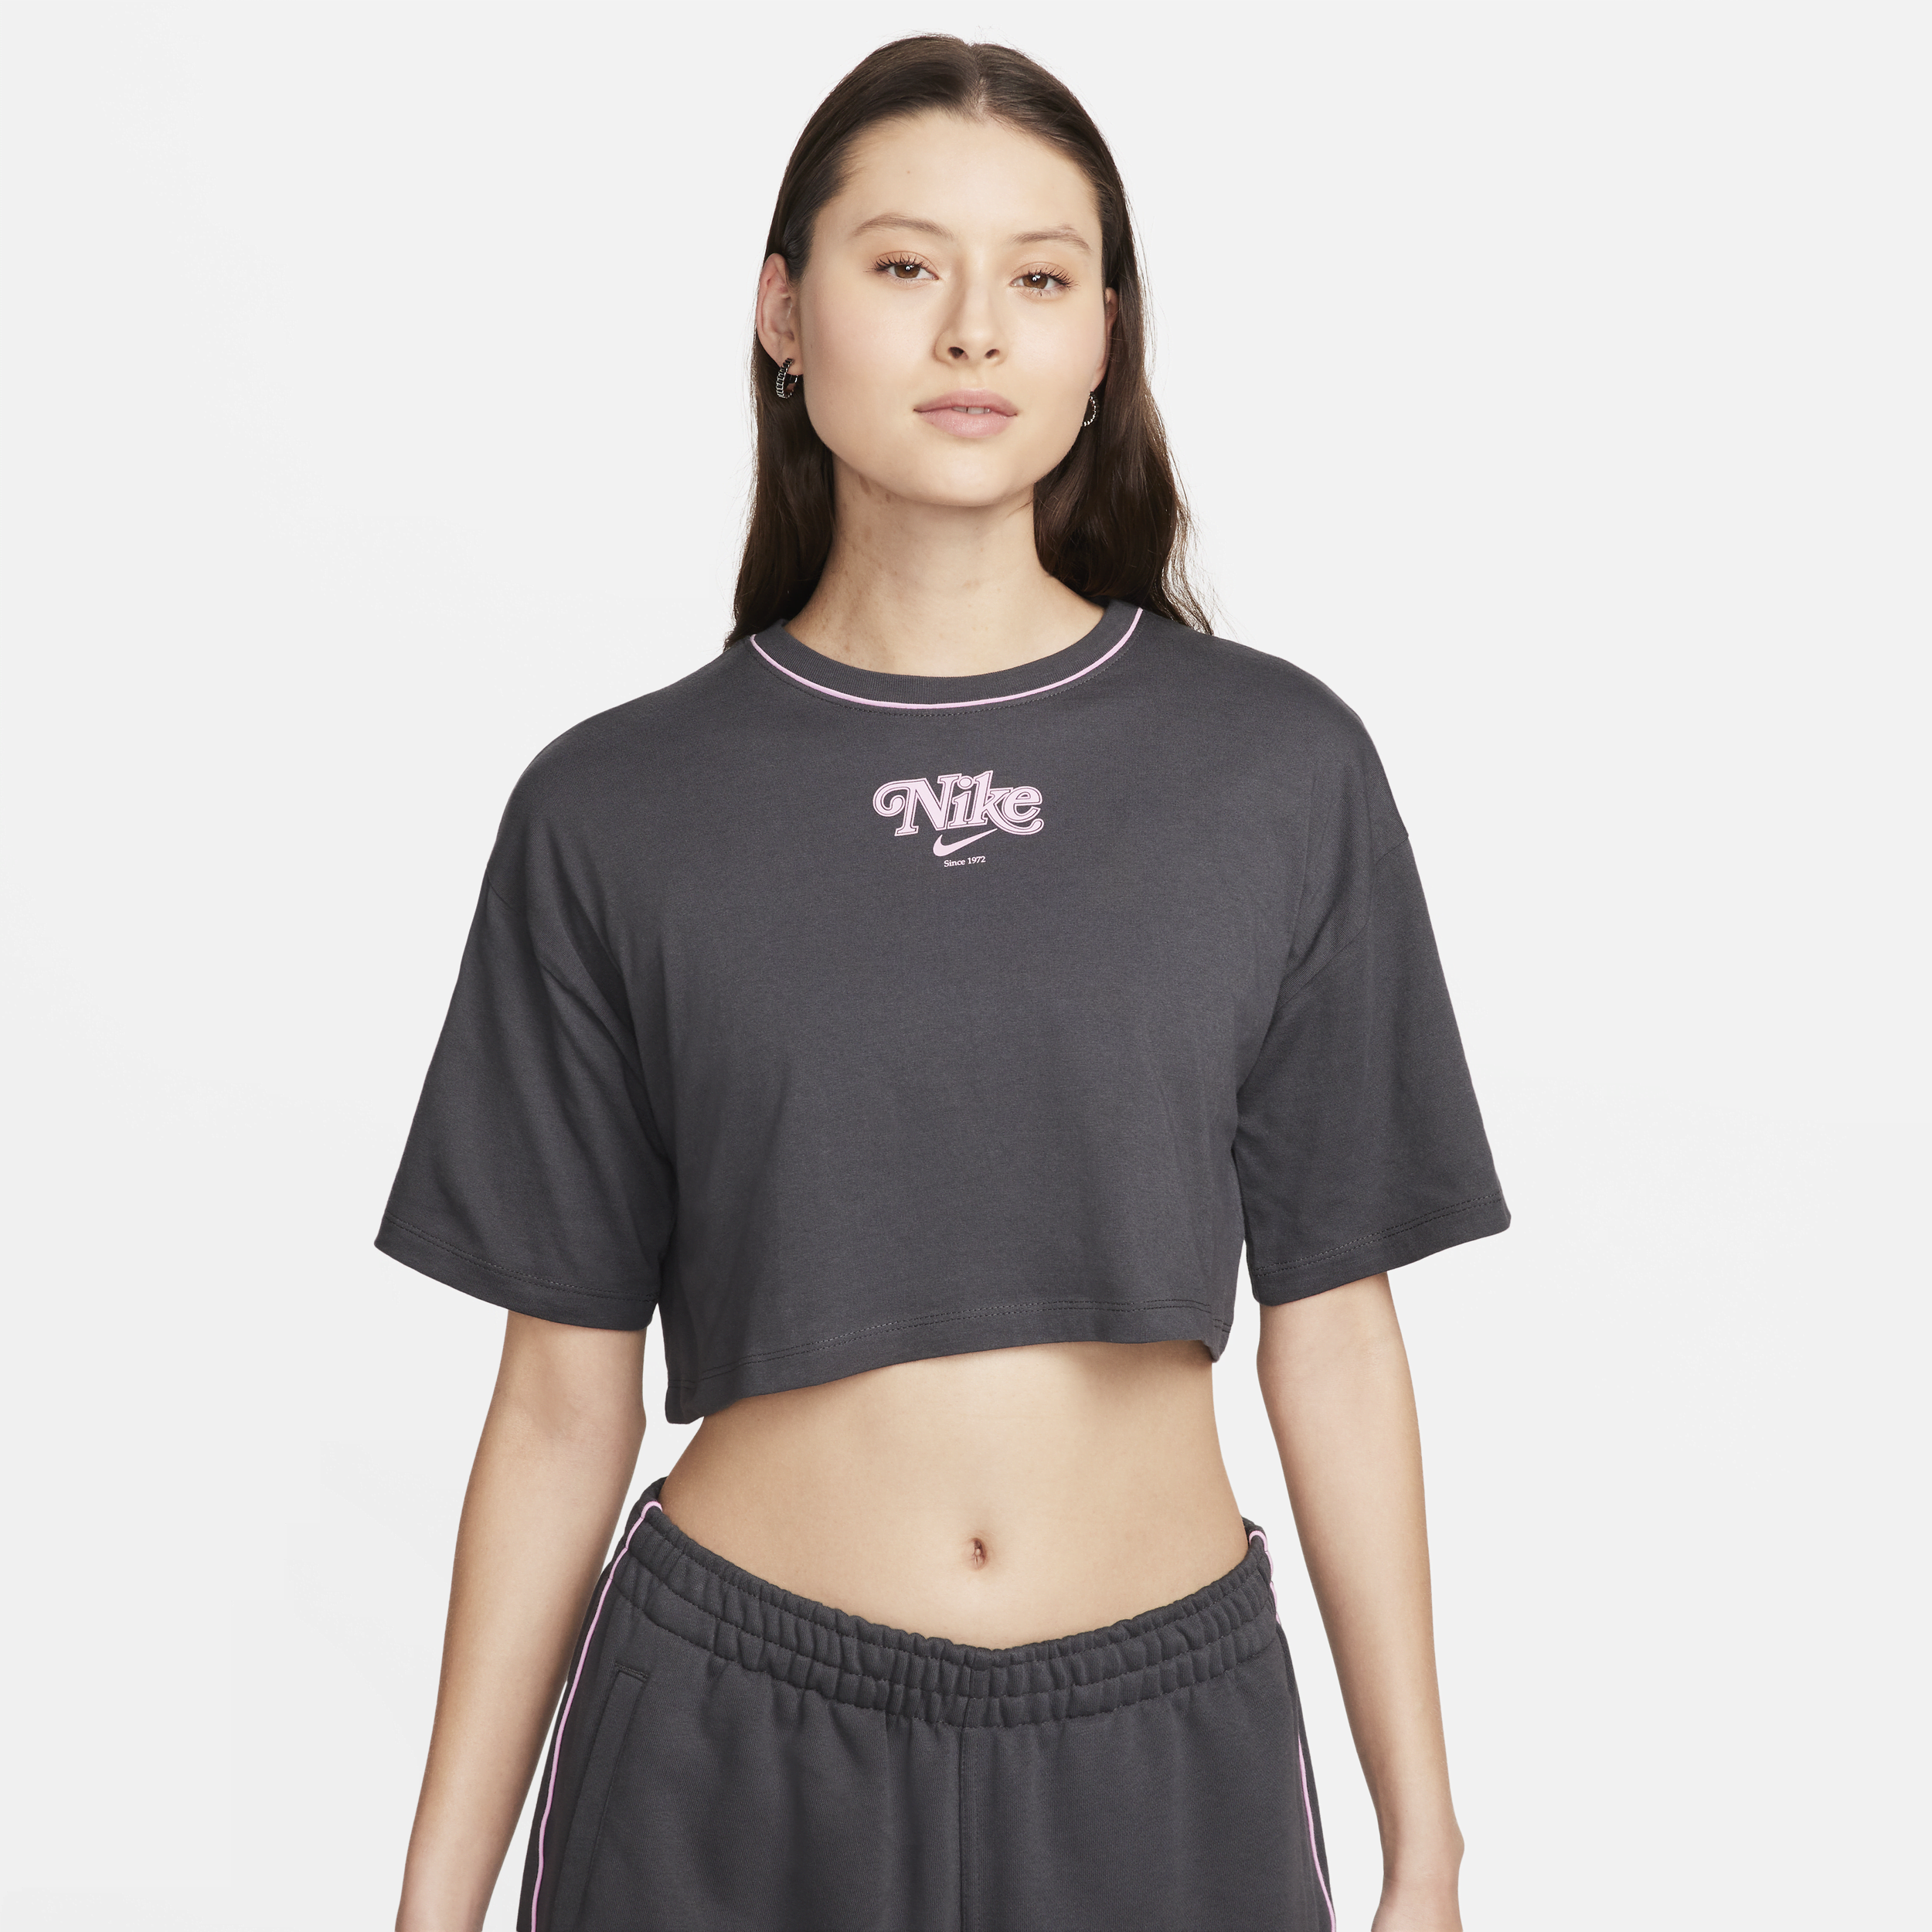 Kort Nike Sportswear-T-shirt til kvinder - grå